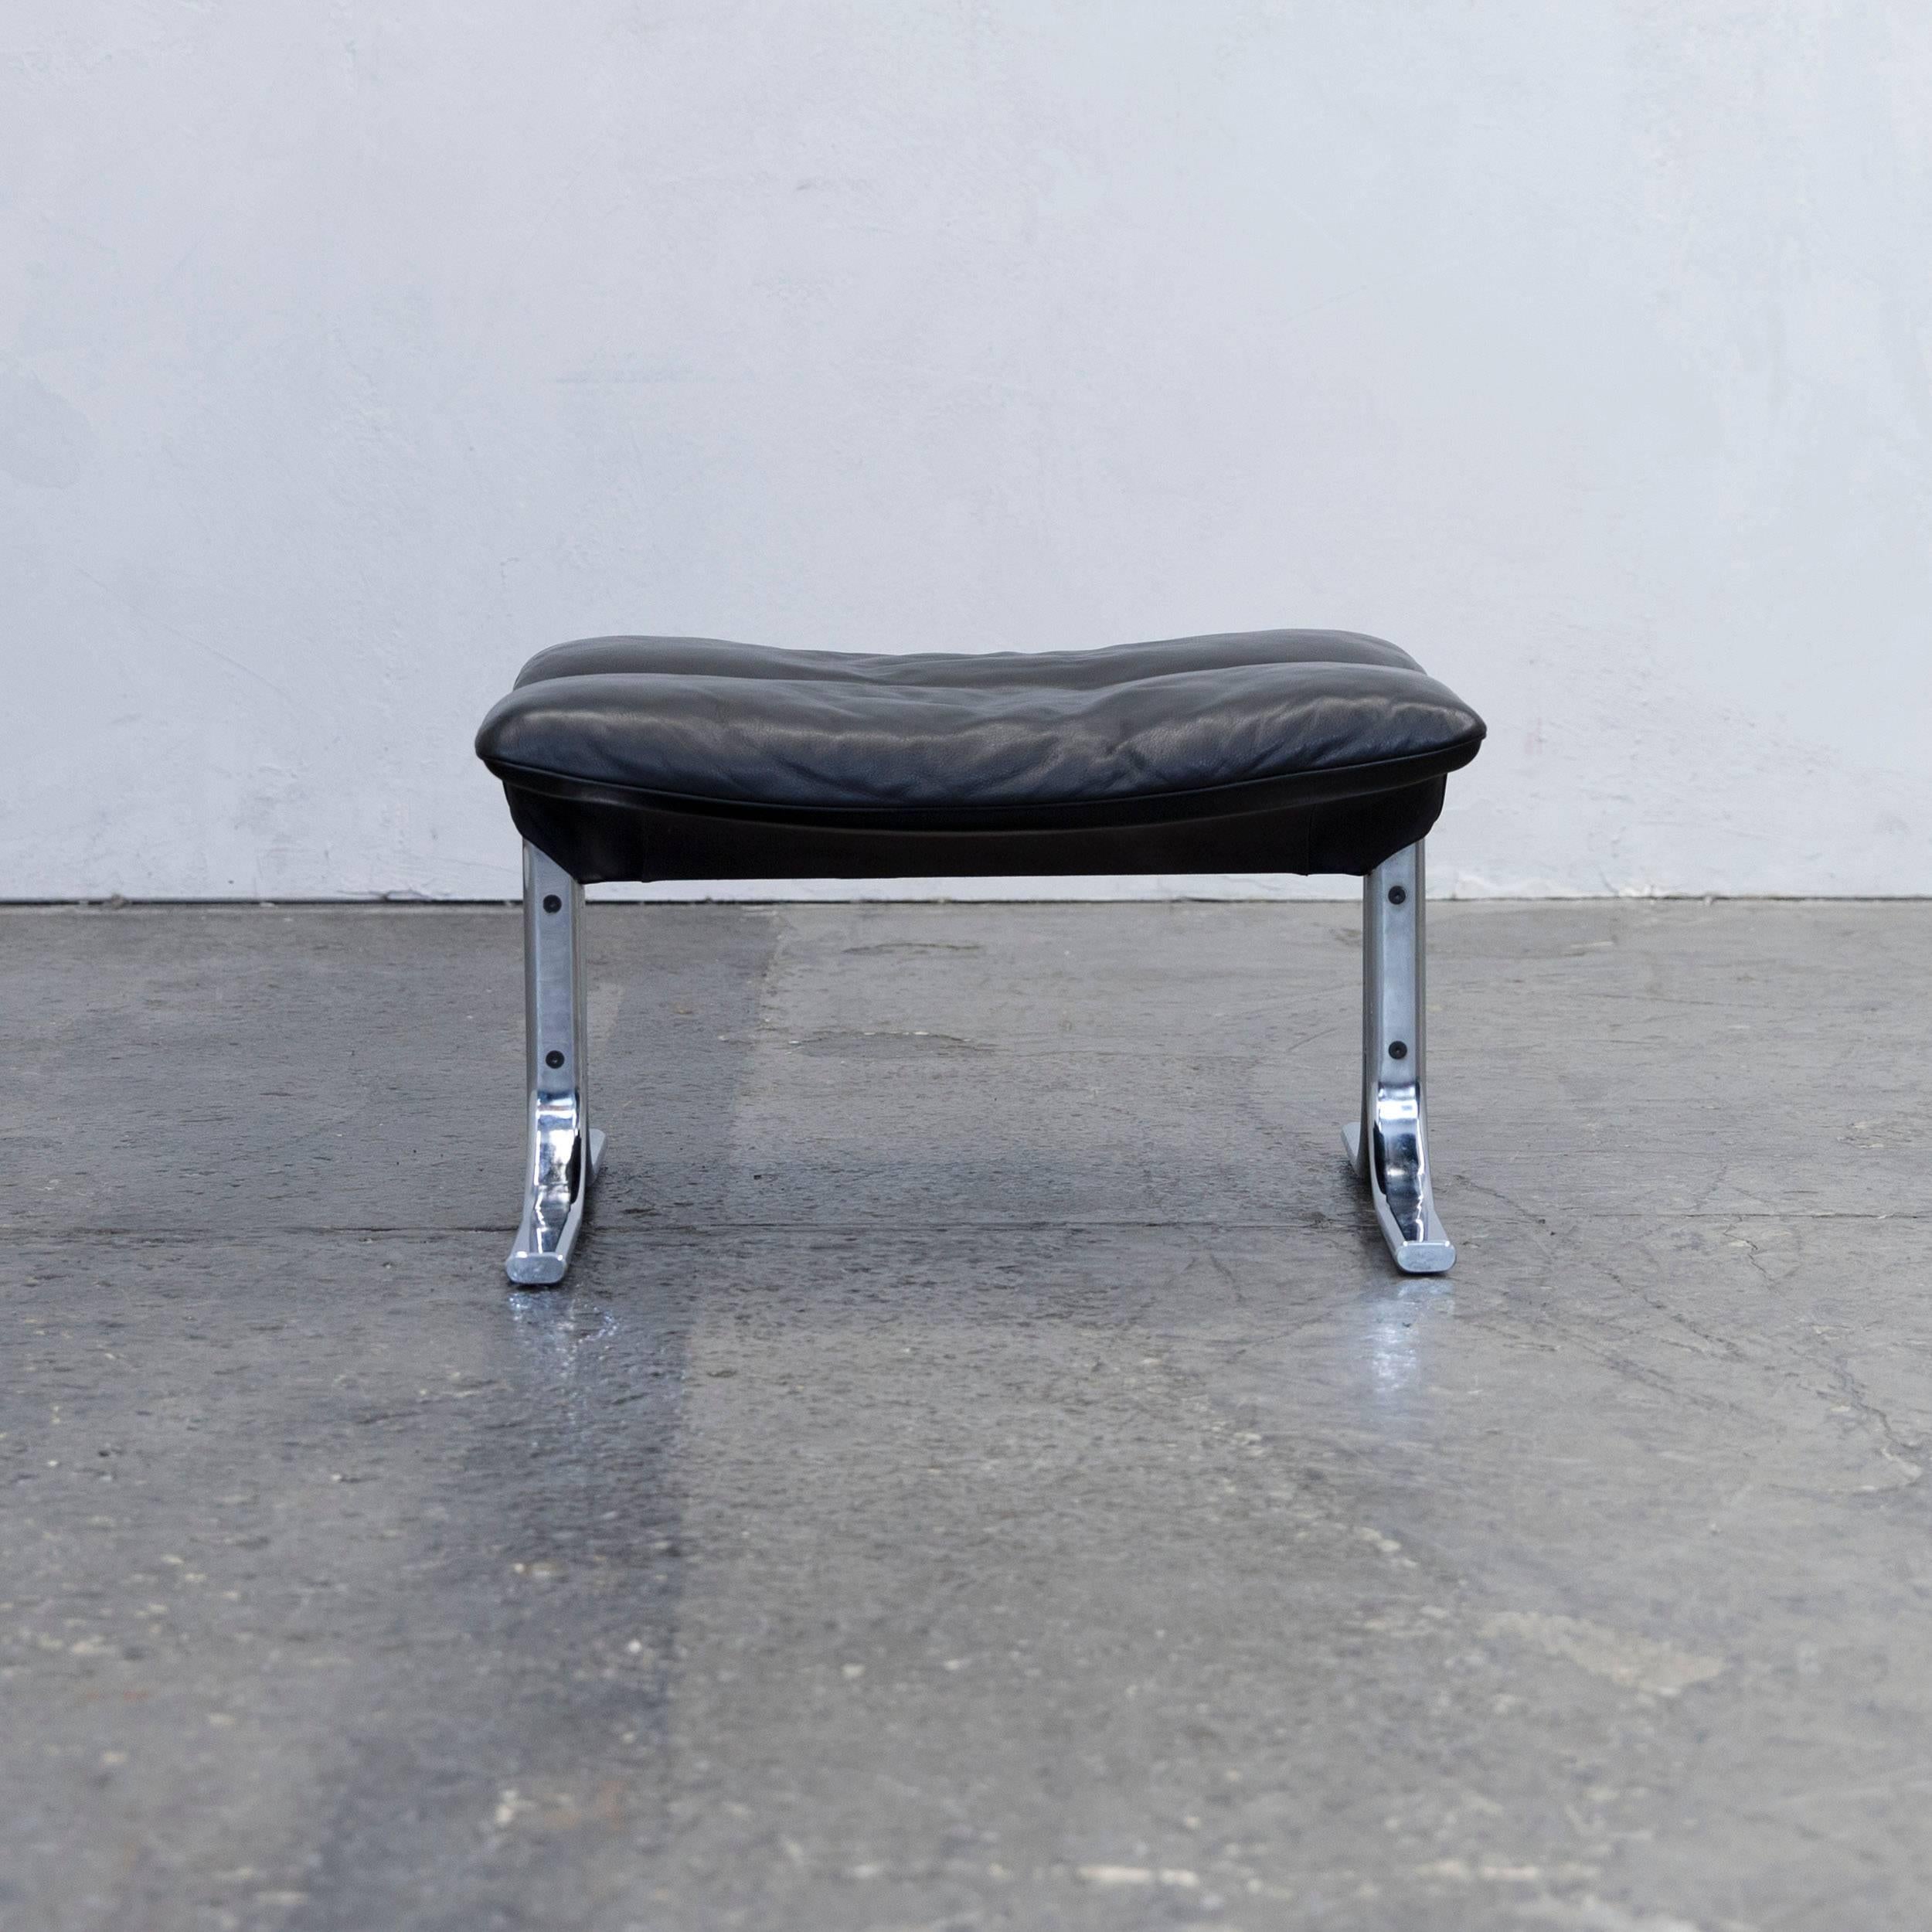 Black colored original De Sede designer leather footstool in a minimalistic and modern design, made for pure comfort.